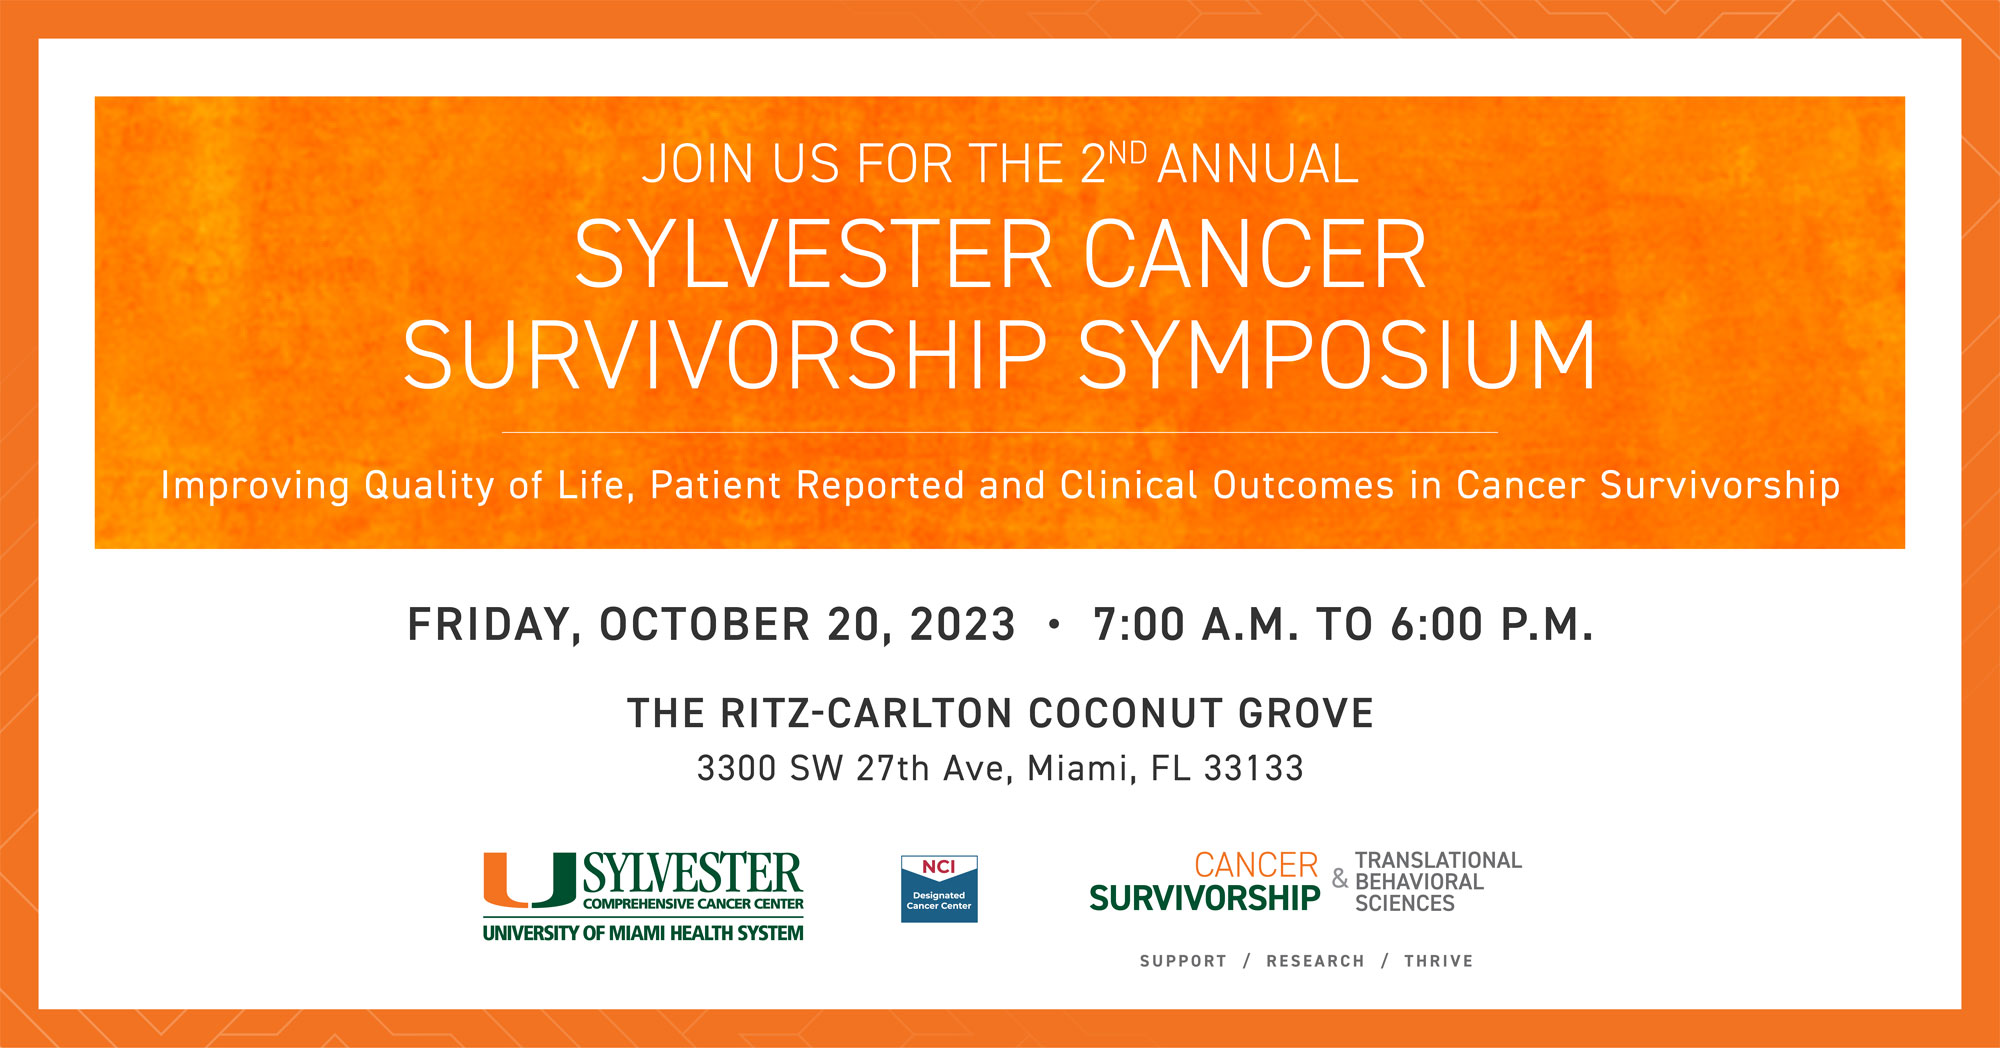 2023 Sylvester Cancer Survivorship Symposium Save the Date